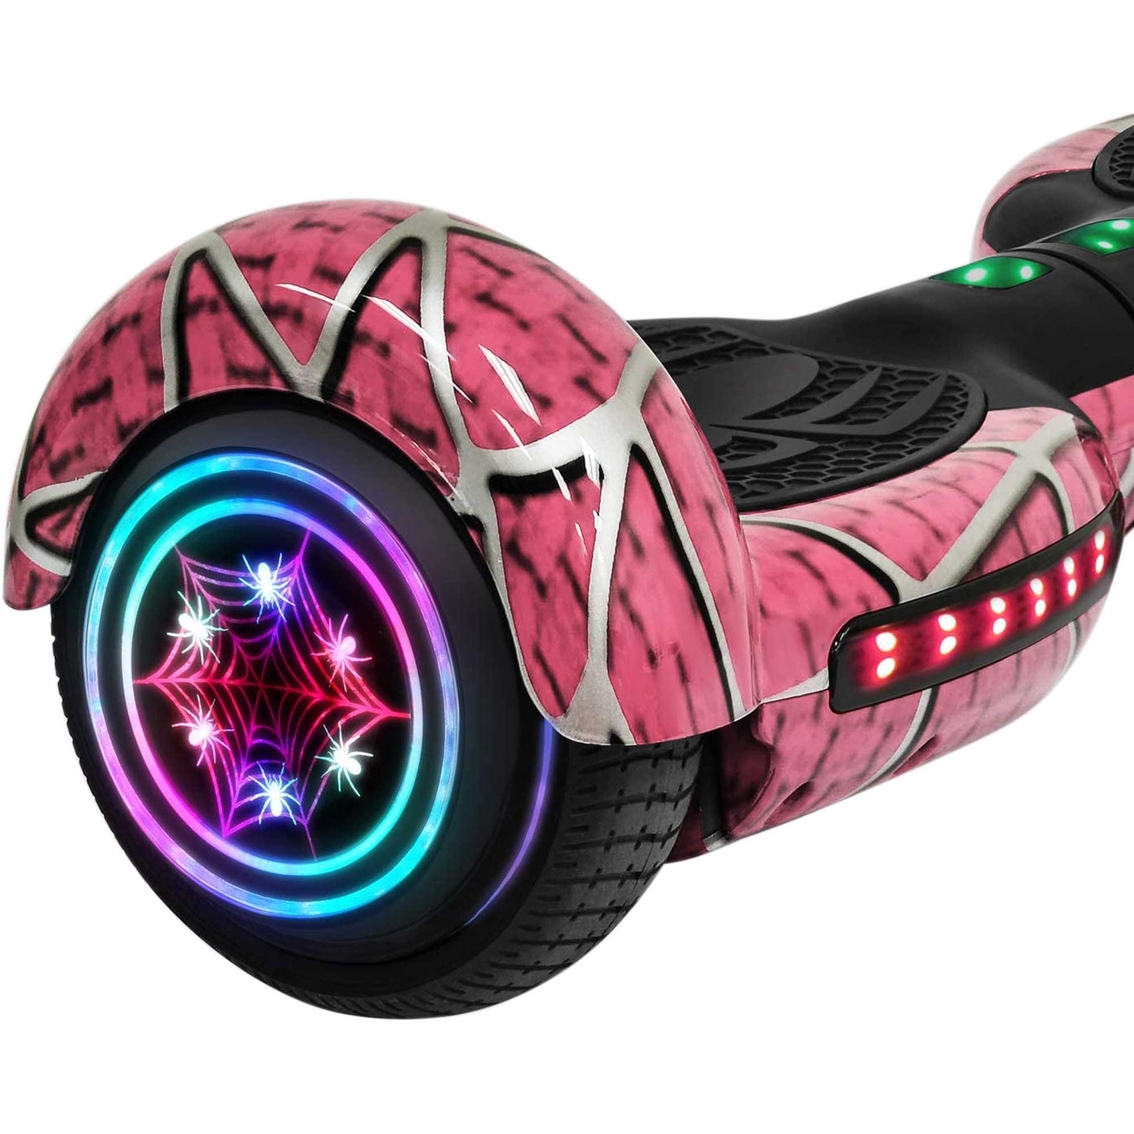 GlareWheel Pink Spider Built In Bluetooth Speaker Hoverboard - Image 6 of 6